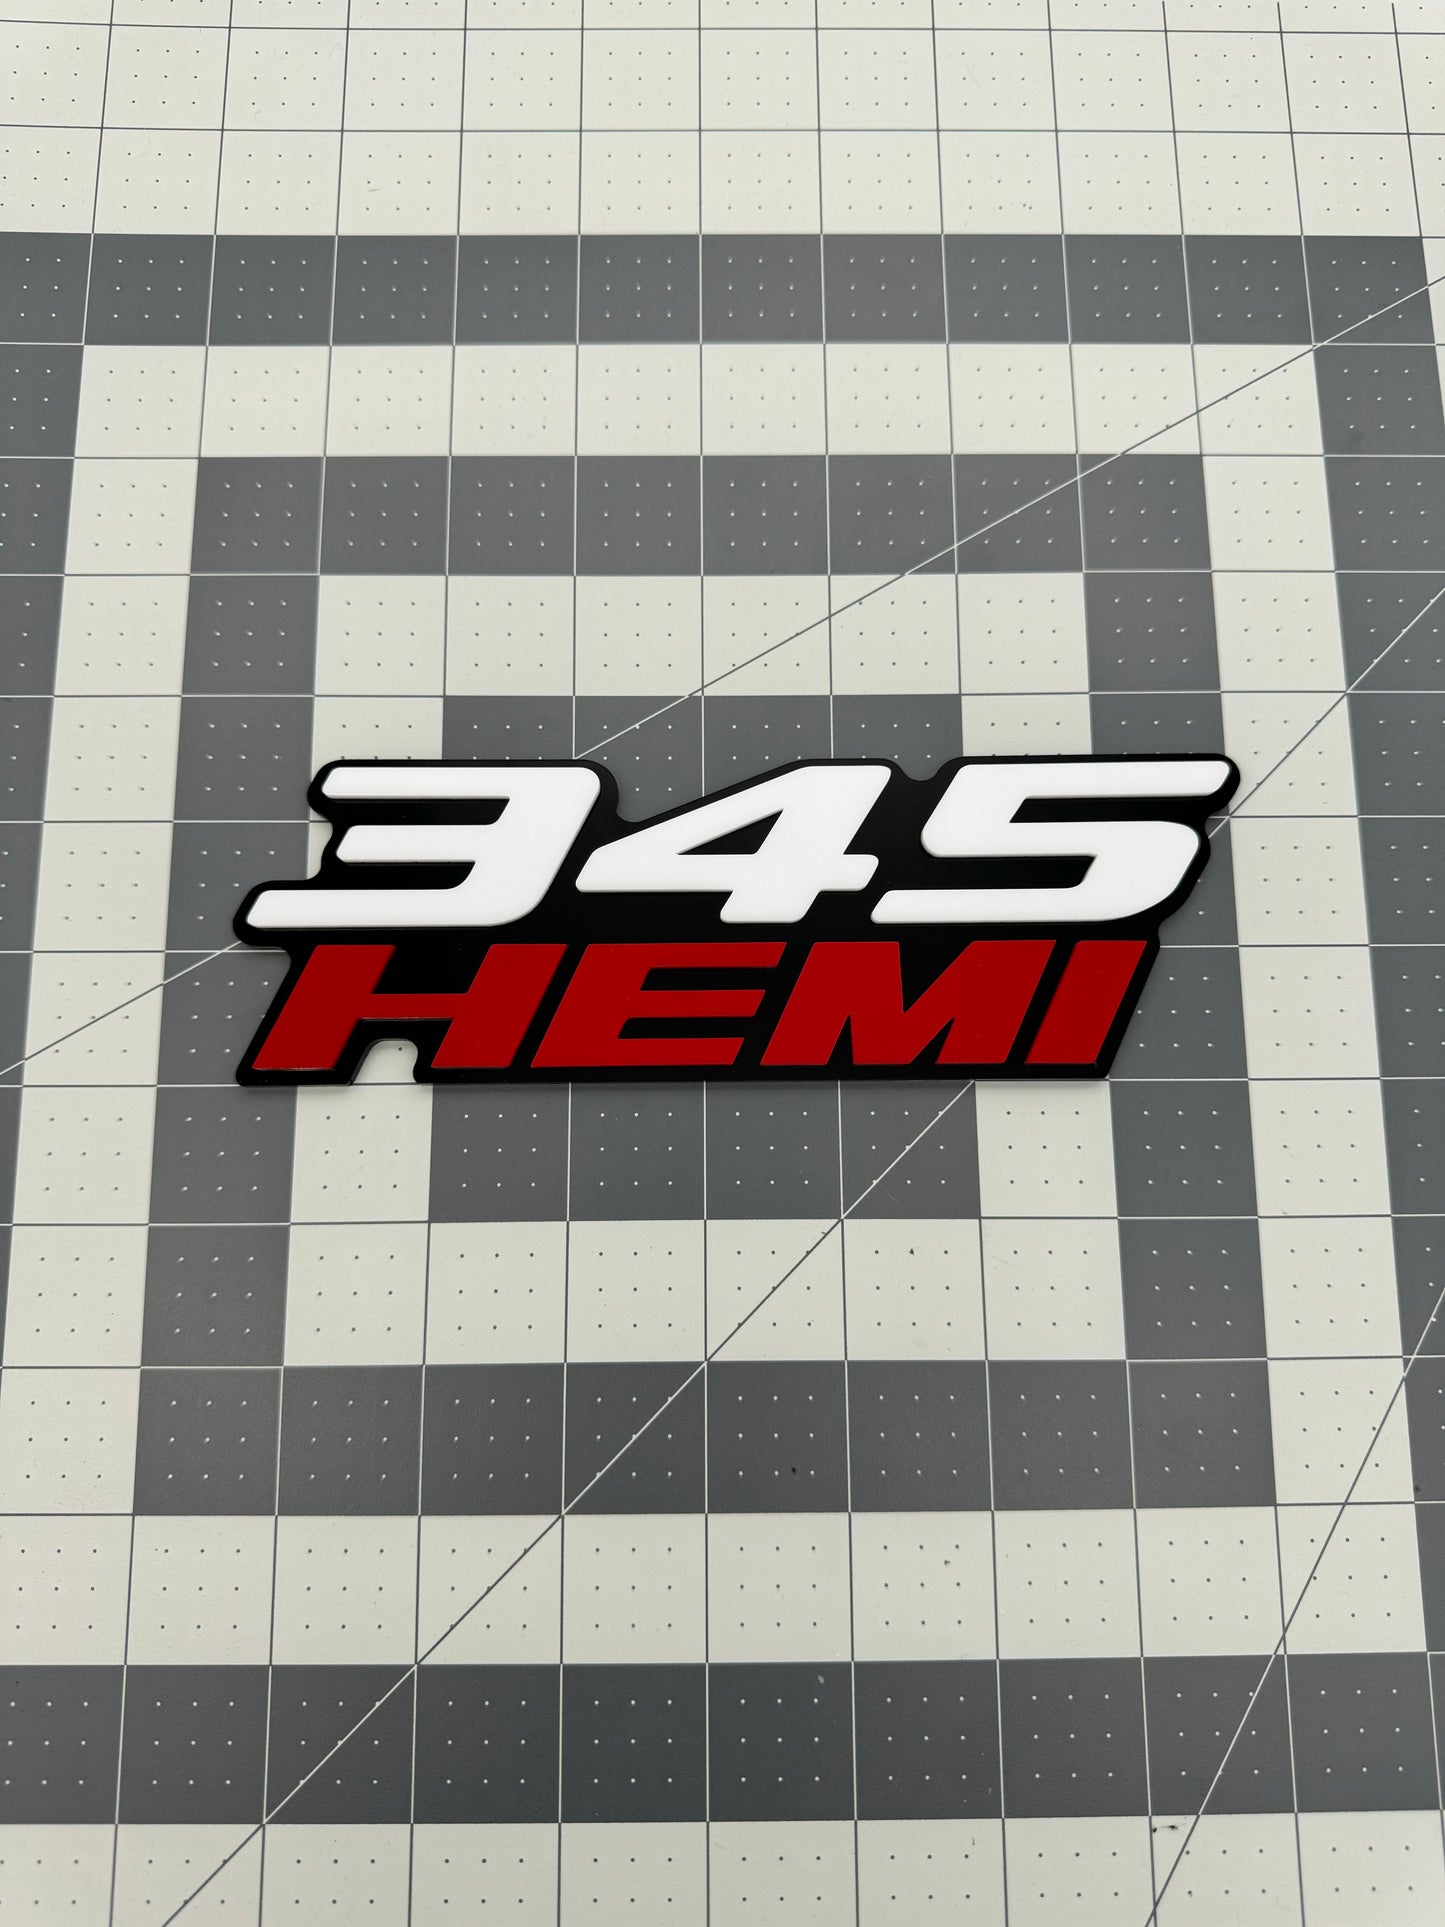 345 Hemi badge